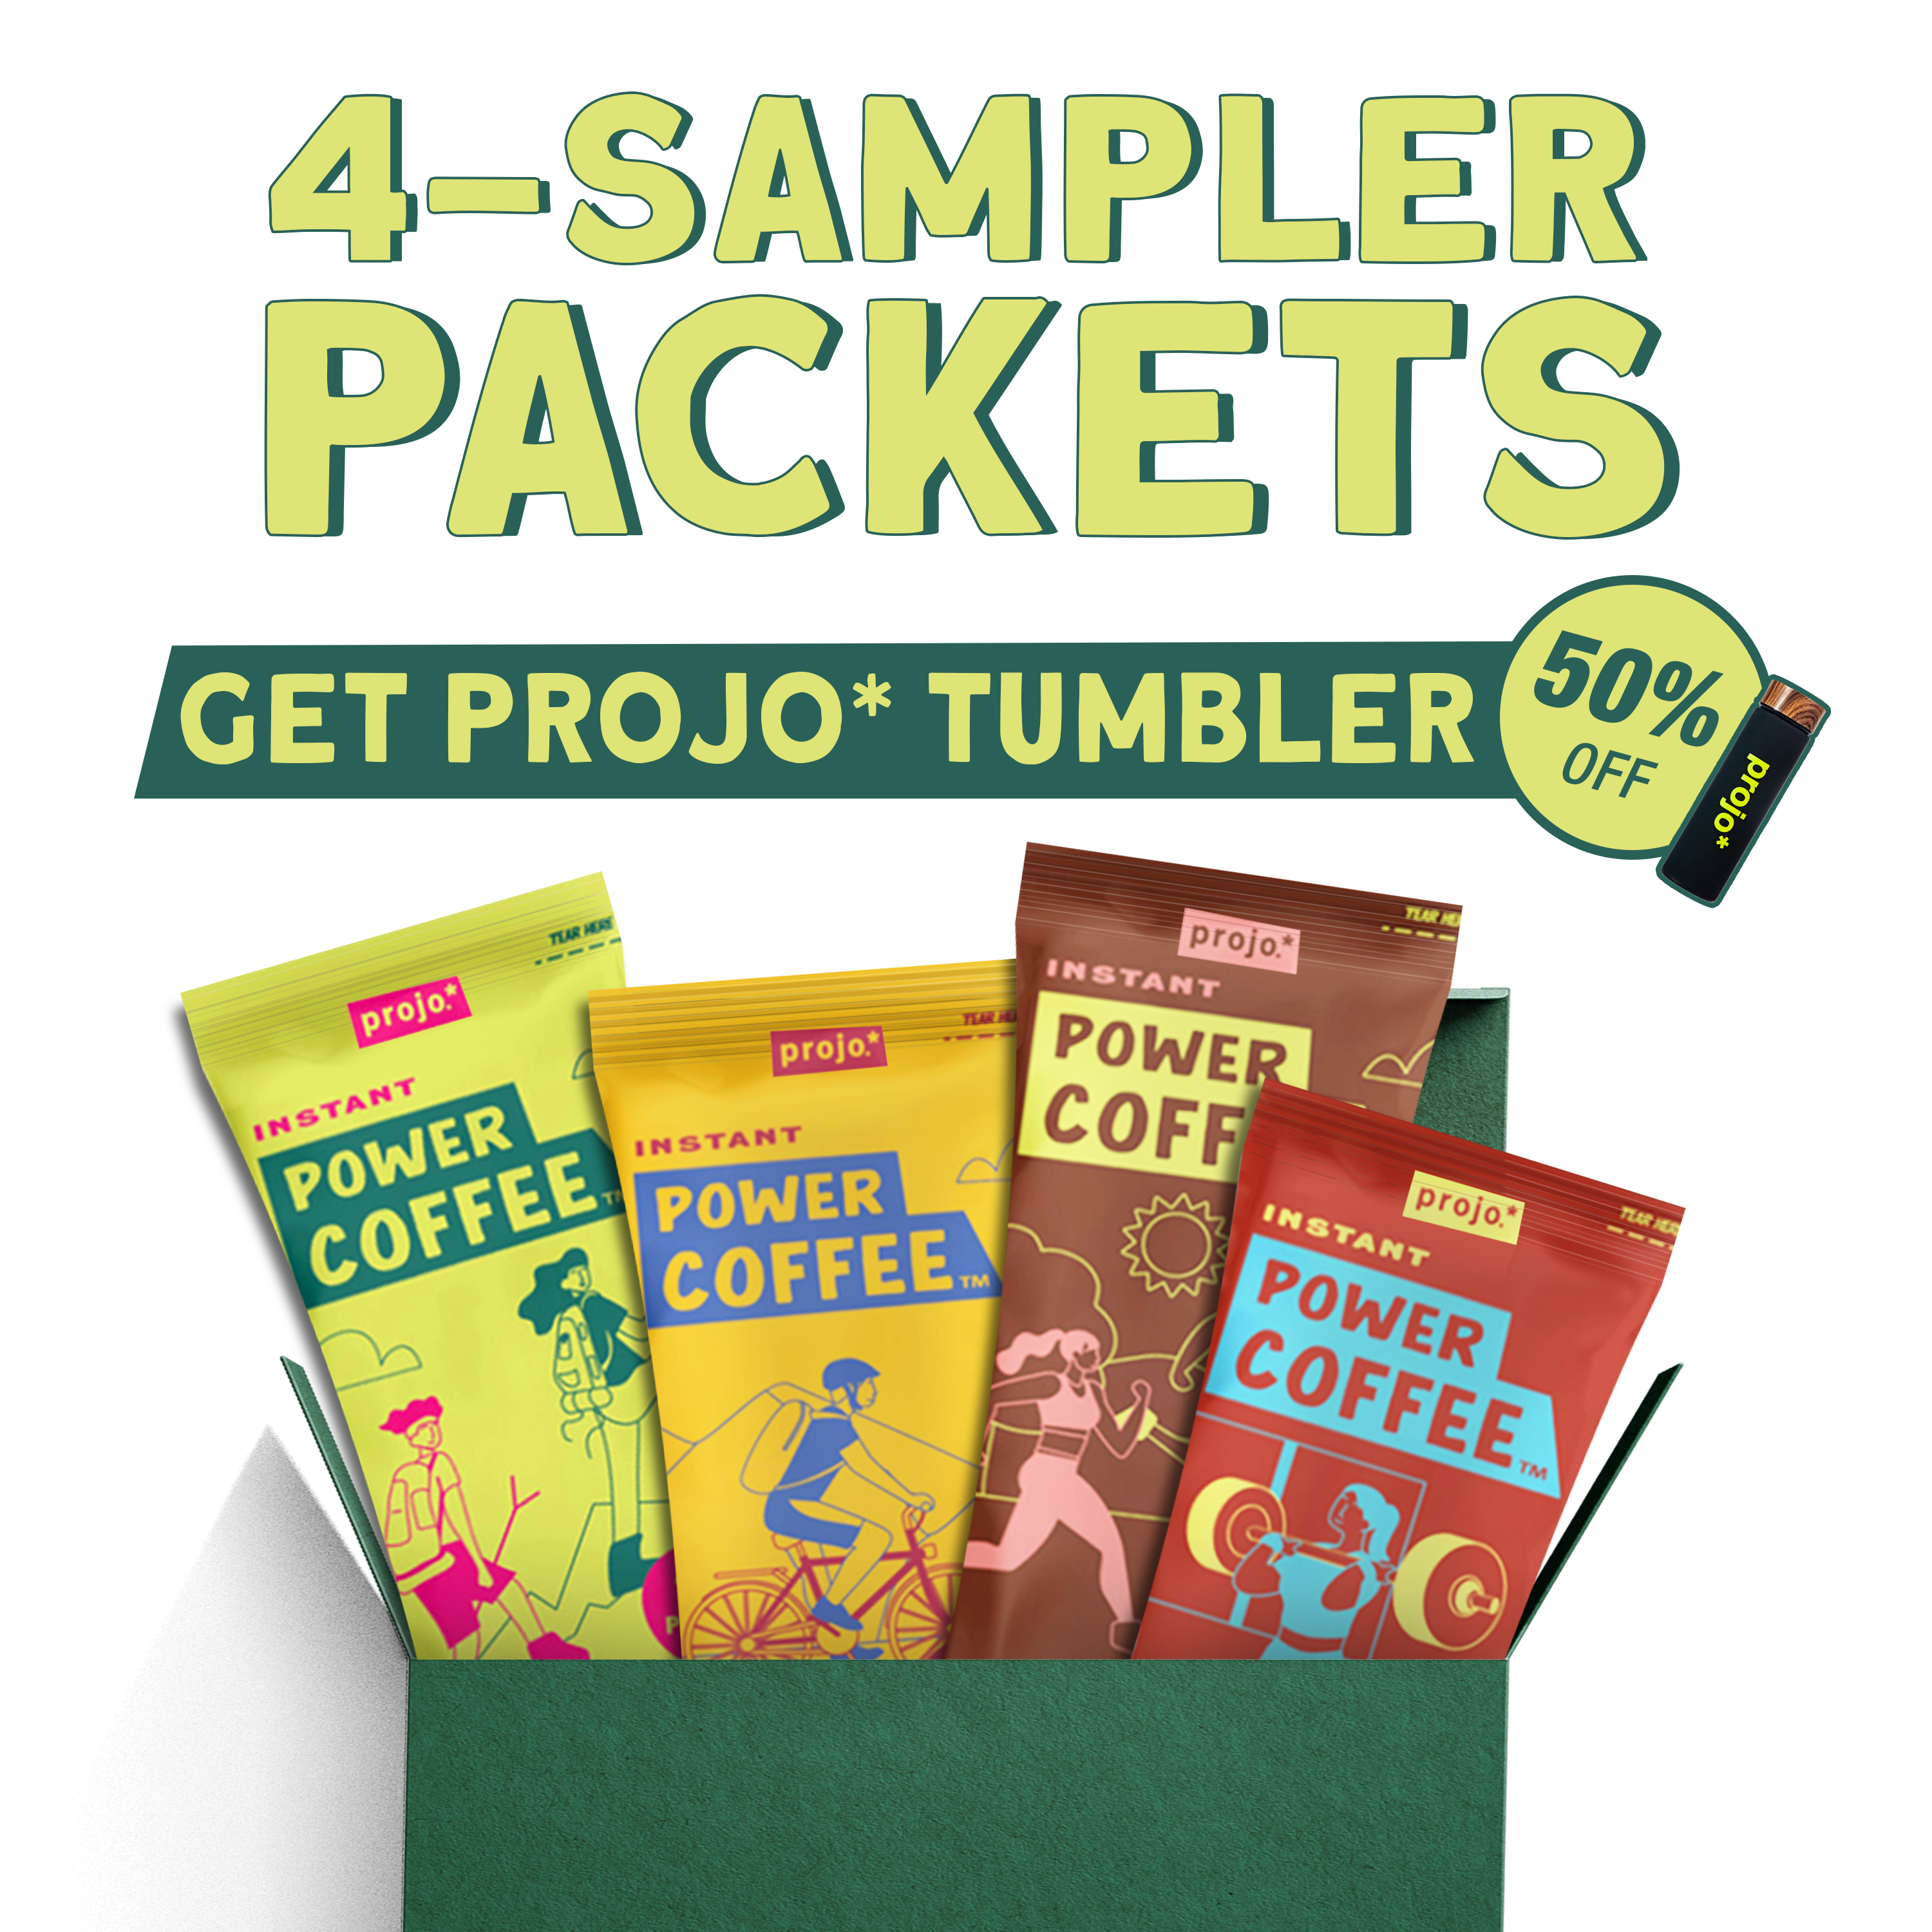 Projo* 4-sampler packets